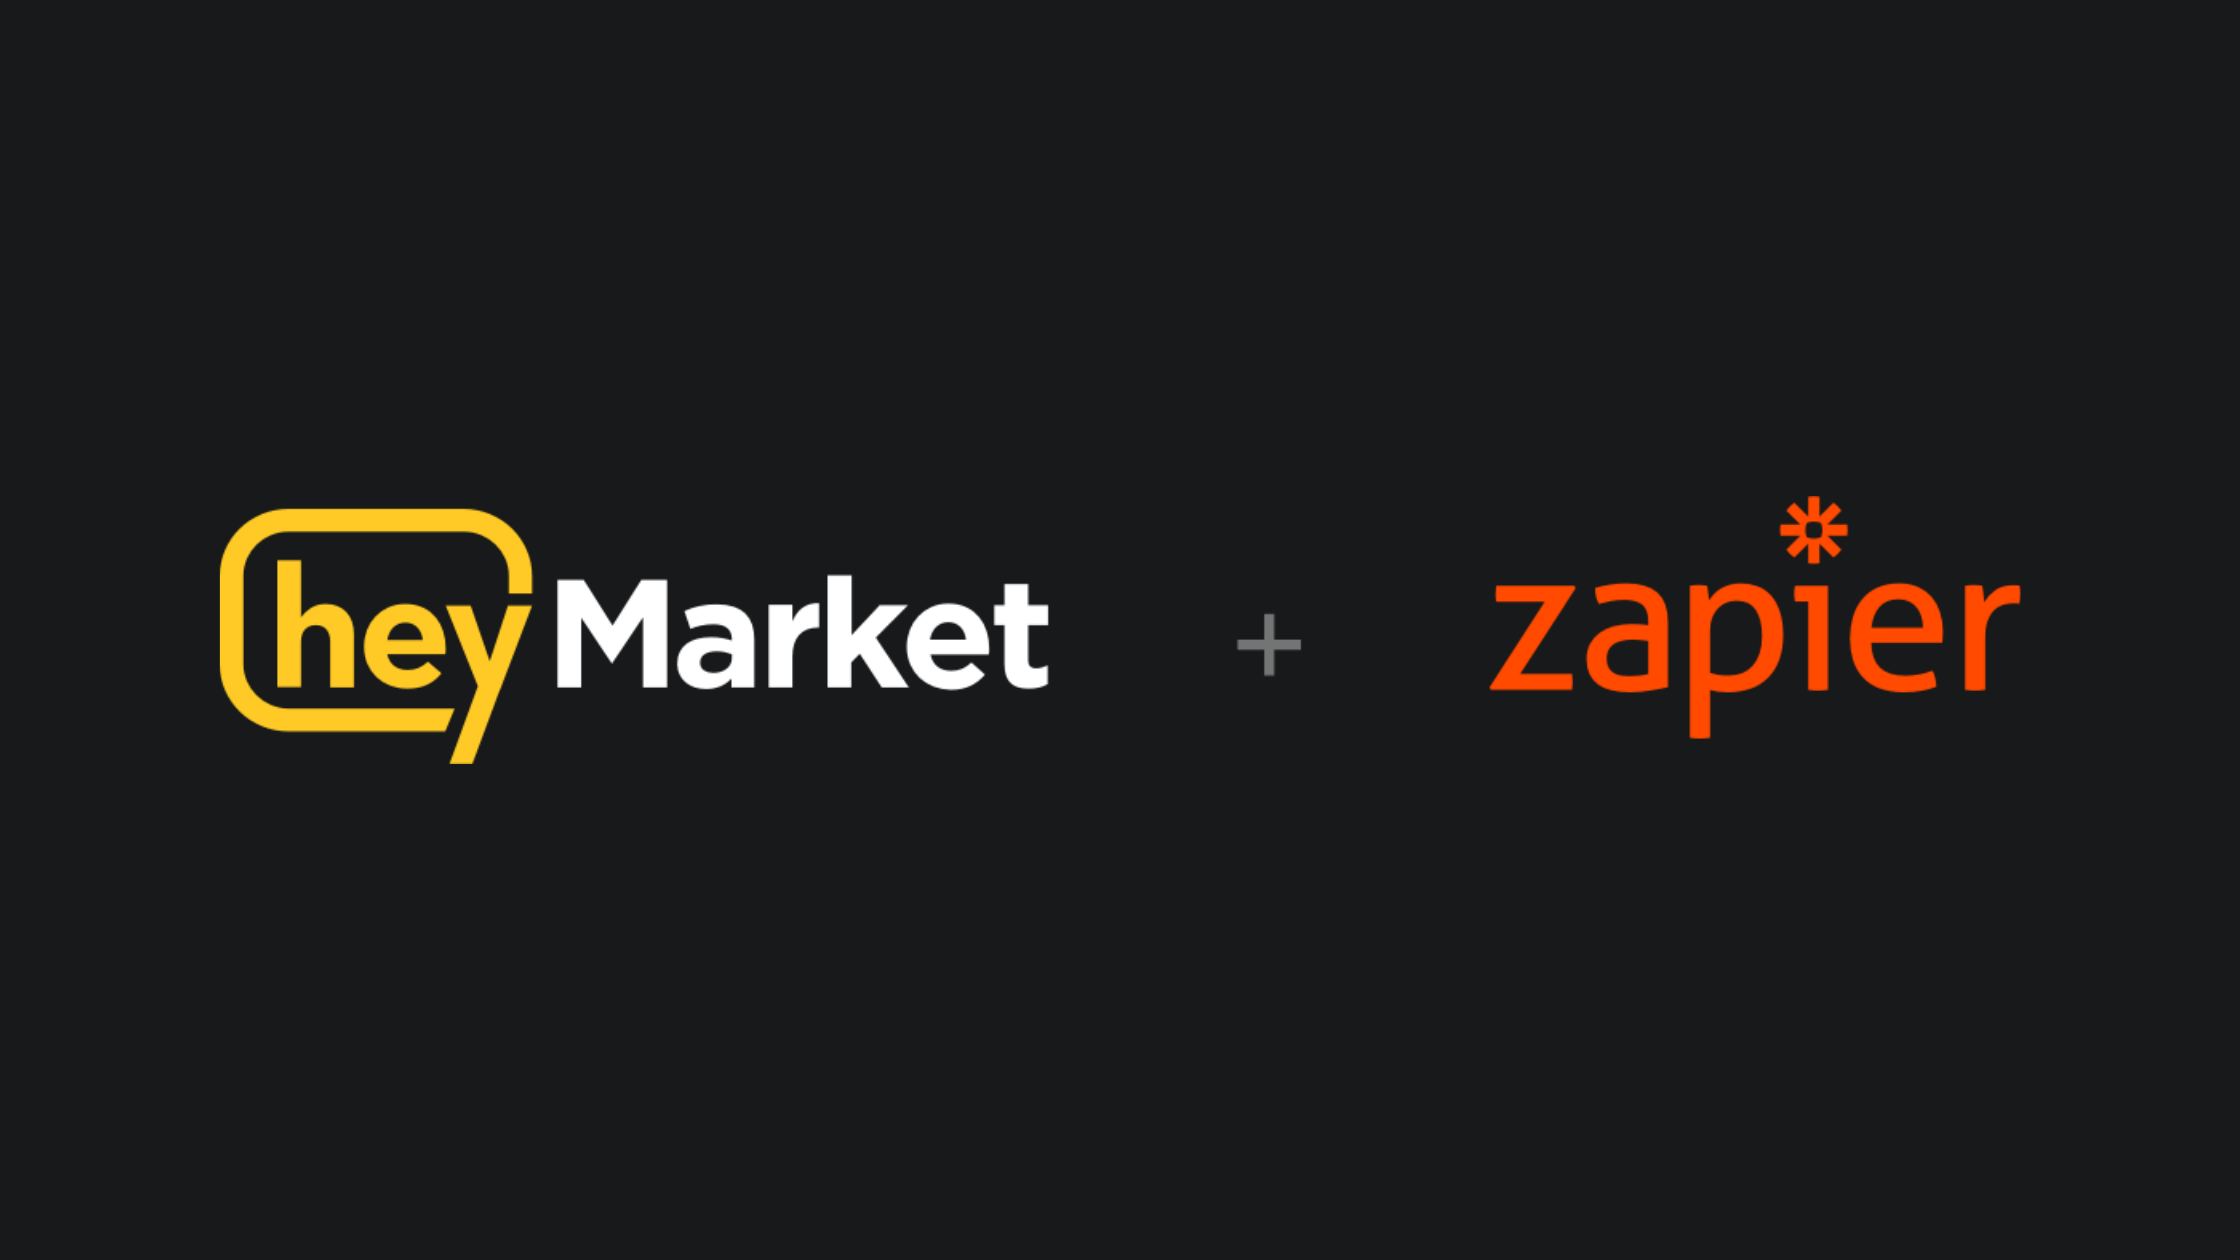 Heymarket and Zapier logos